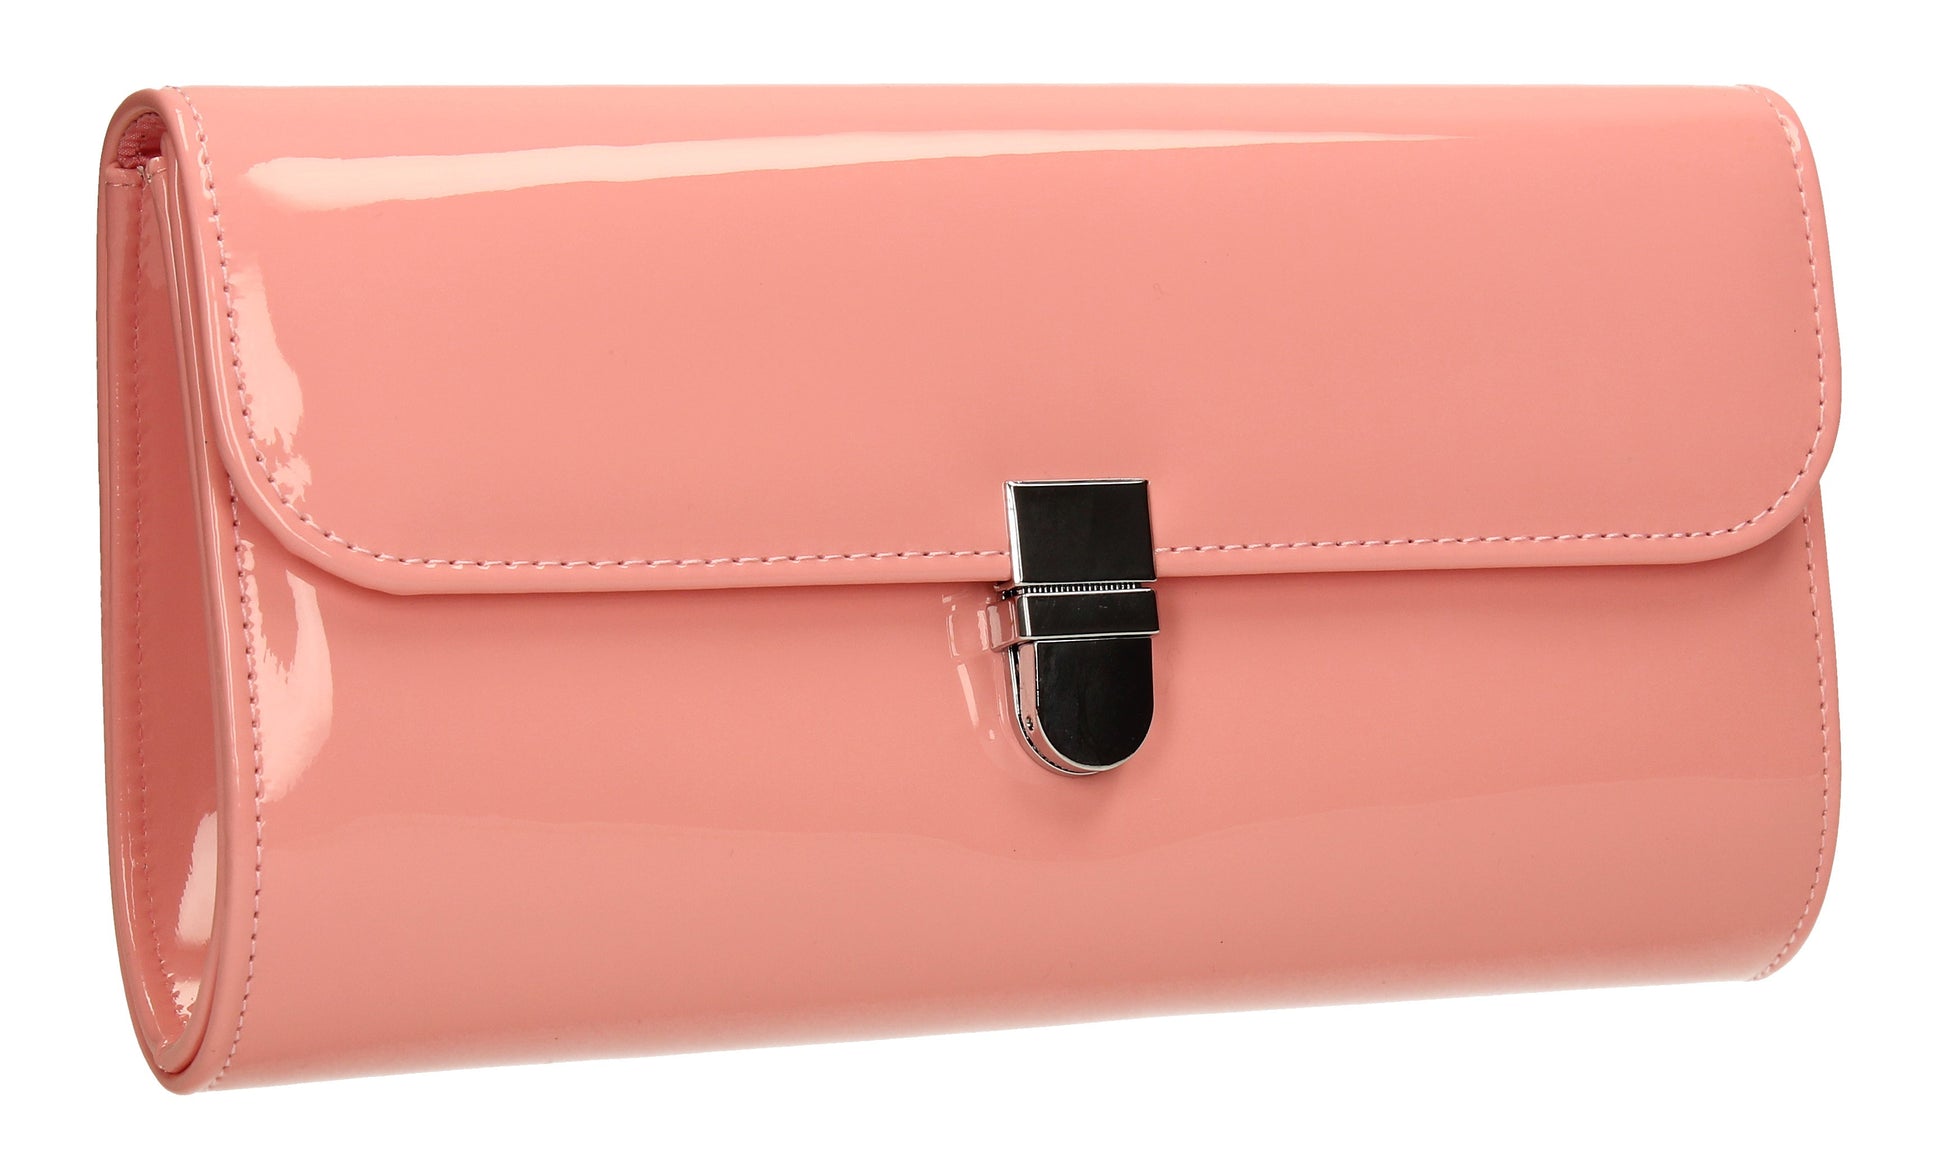 SWANKYSWANS Roxy Clutch Bag Pink Cute Cheap Clutch Bag For Weddings School and Work